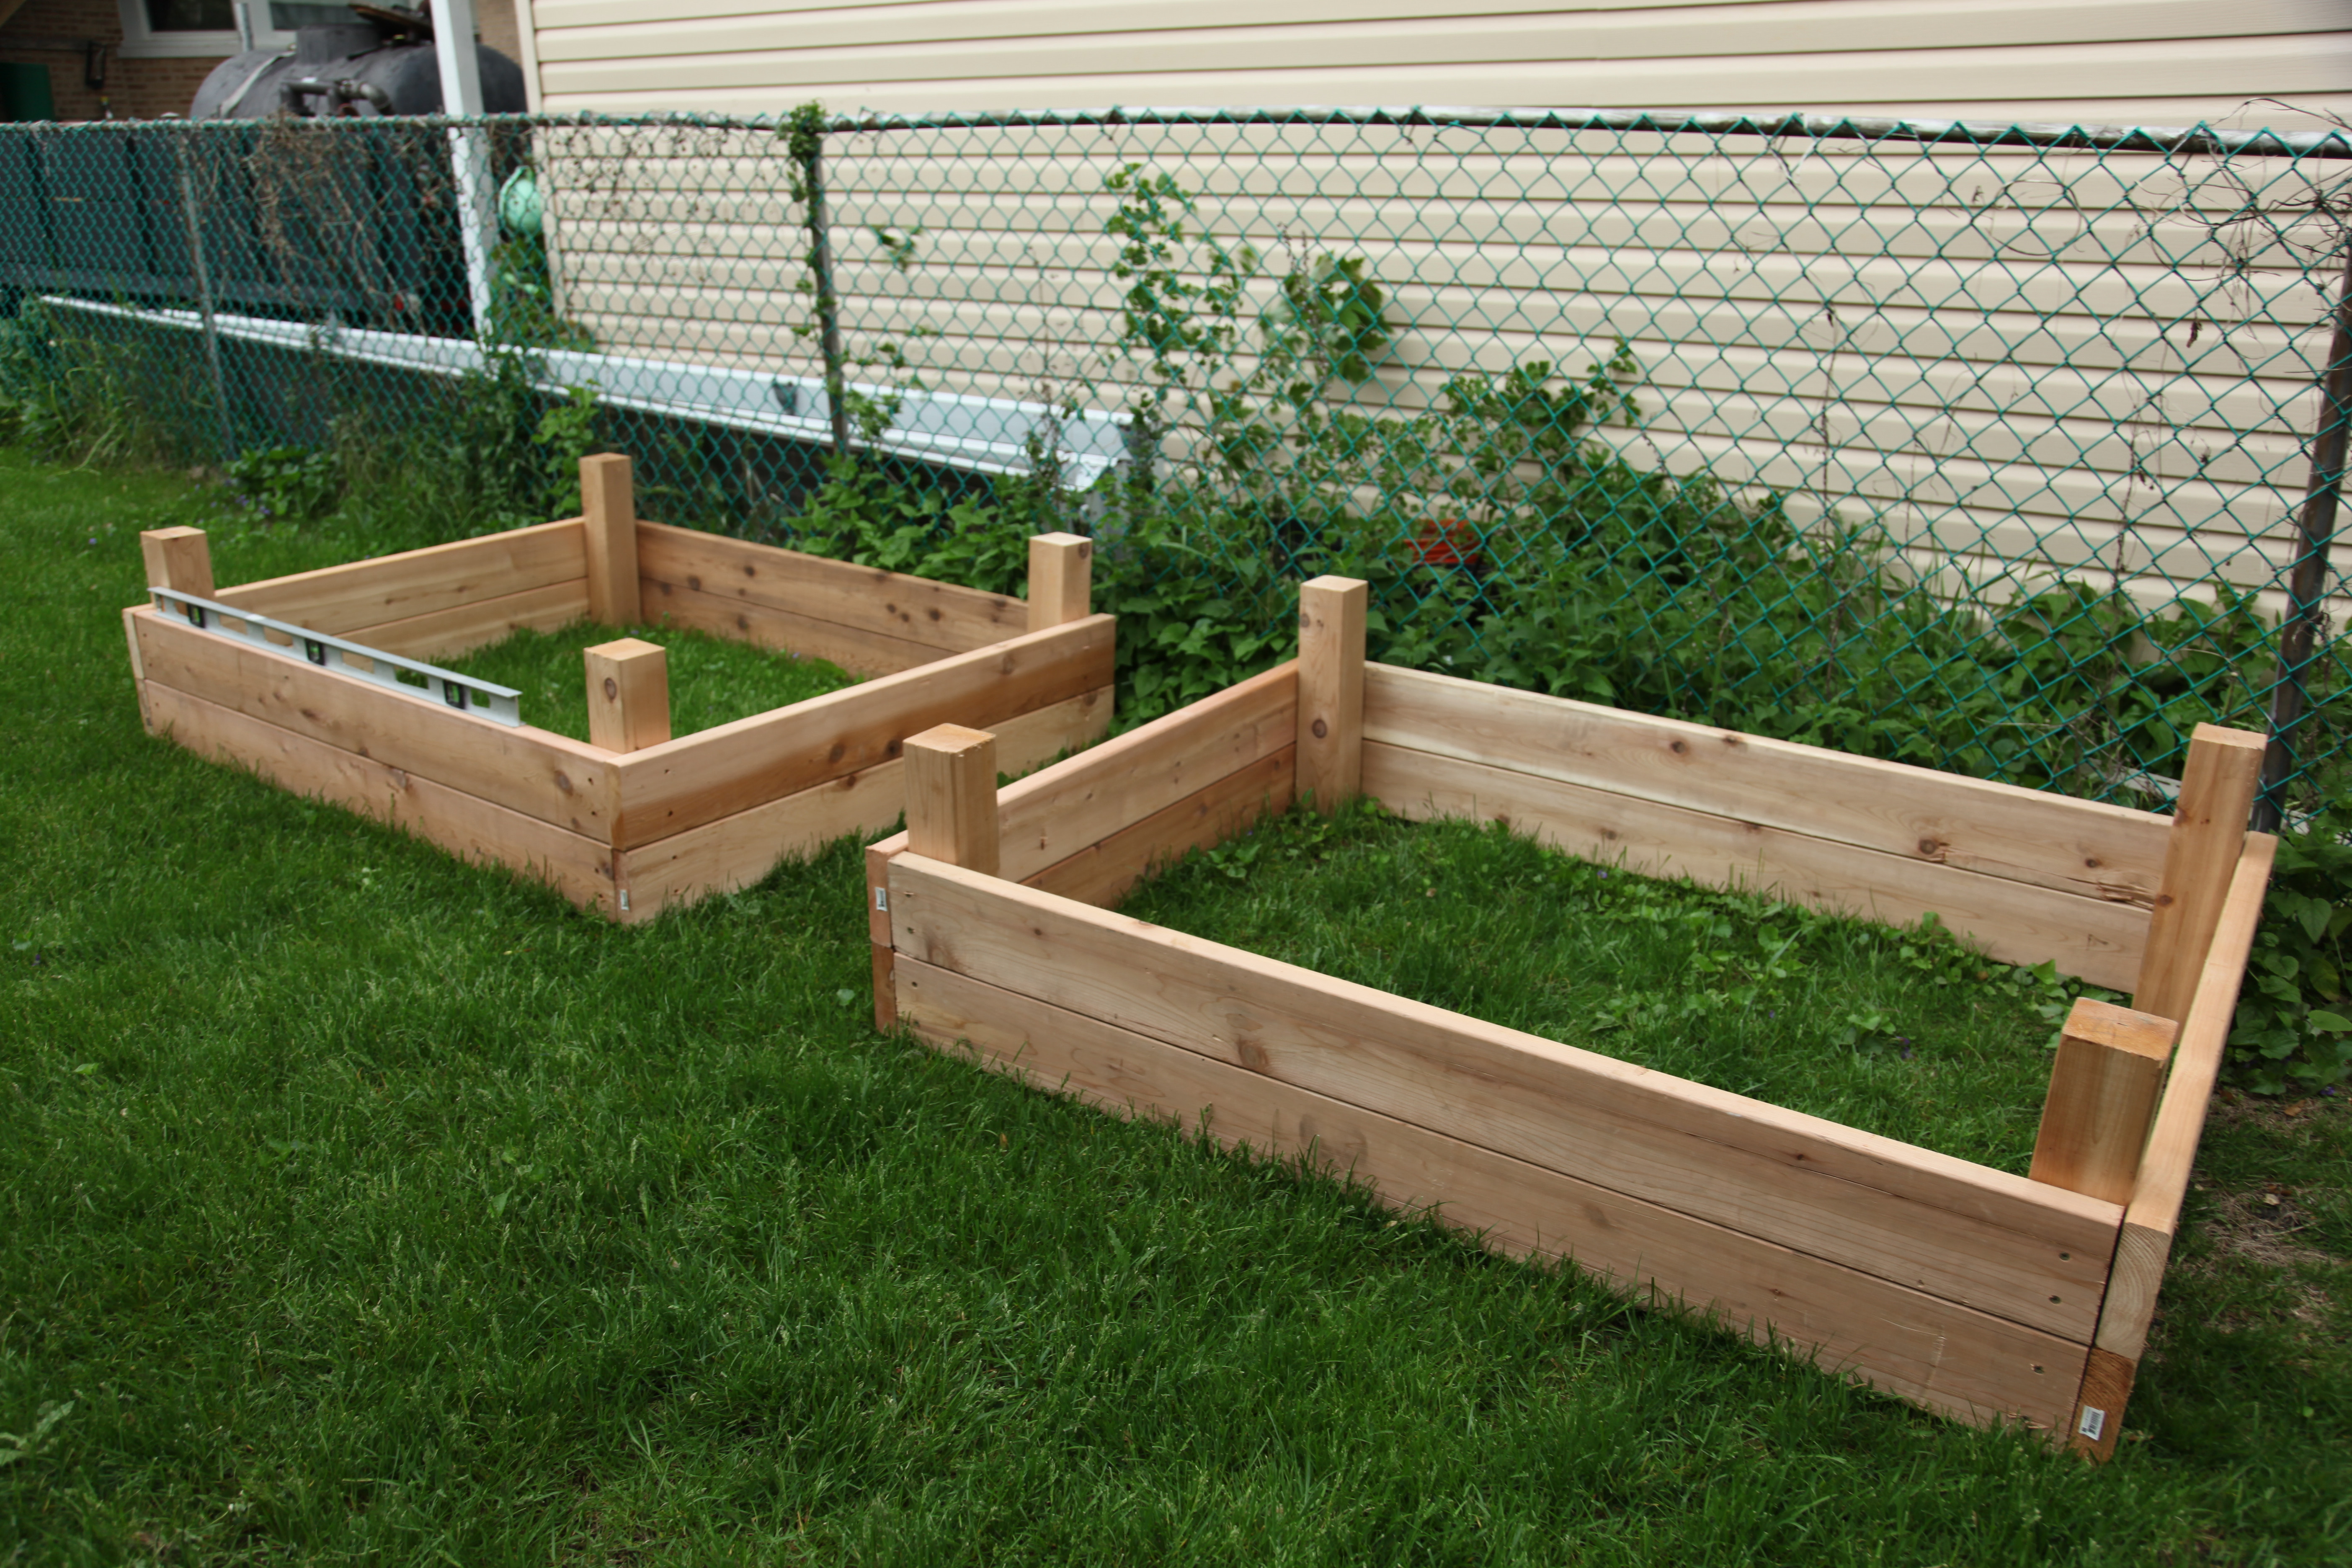 Best ideas about DIY Garden Box
. Save or Pin DIY Raised Garden Beds Now.